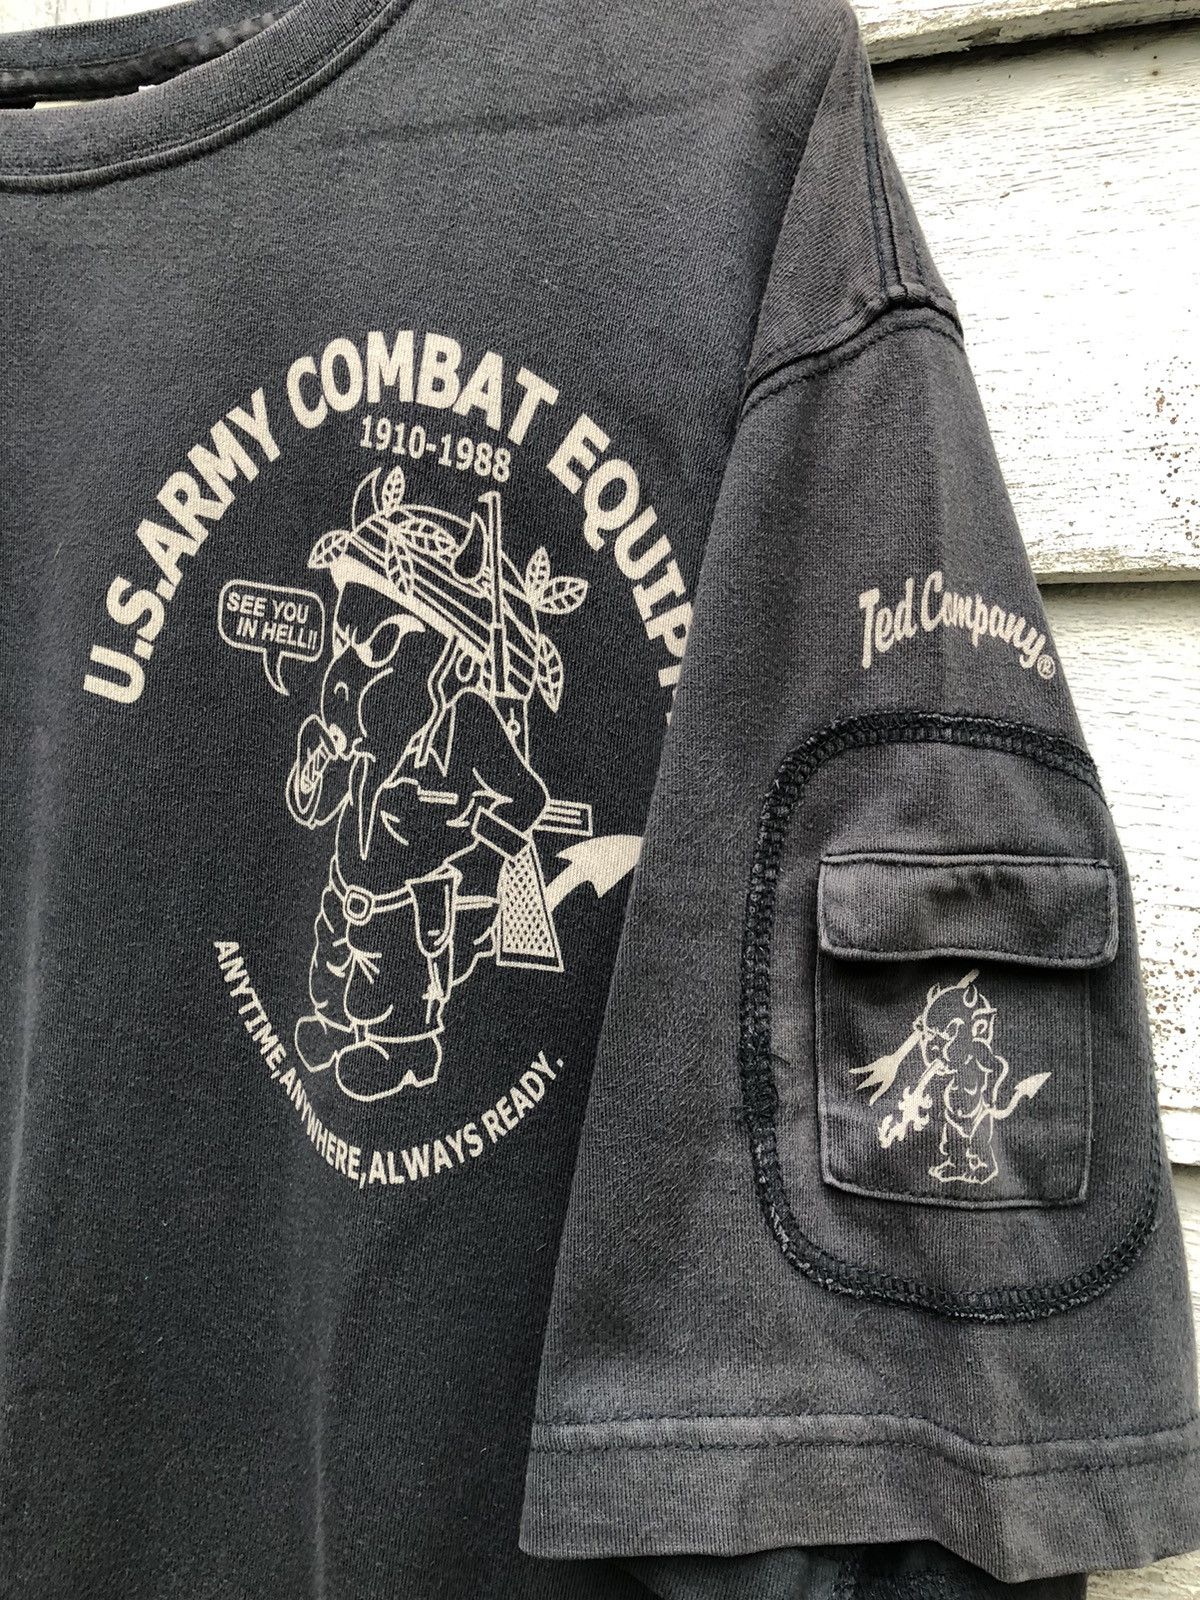 Military - Vintage Tedman Us Army Combat Equipment 1910-1988 Shirt - 5